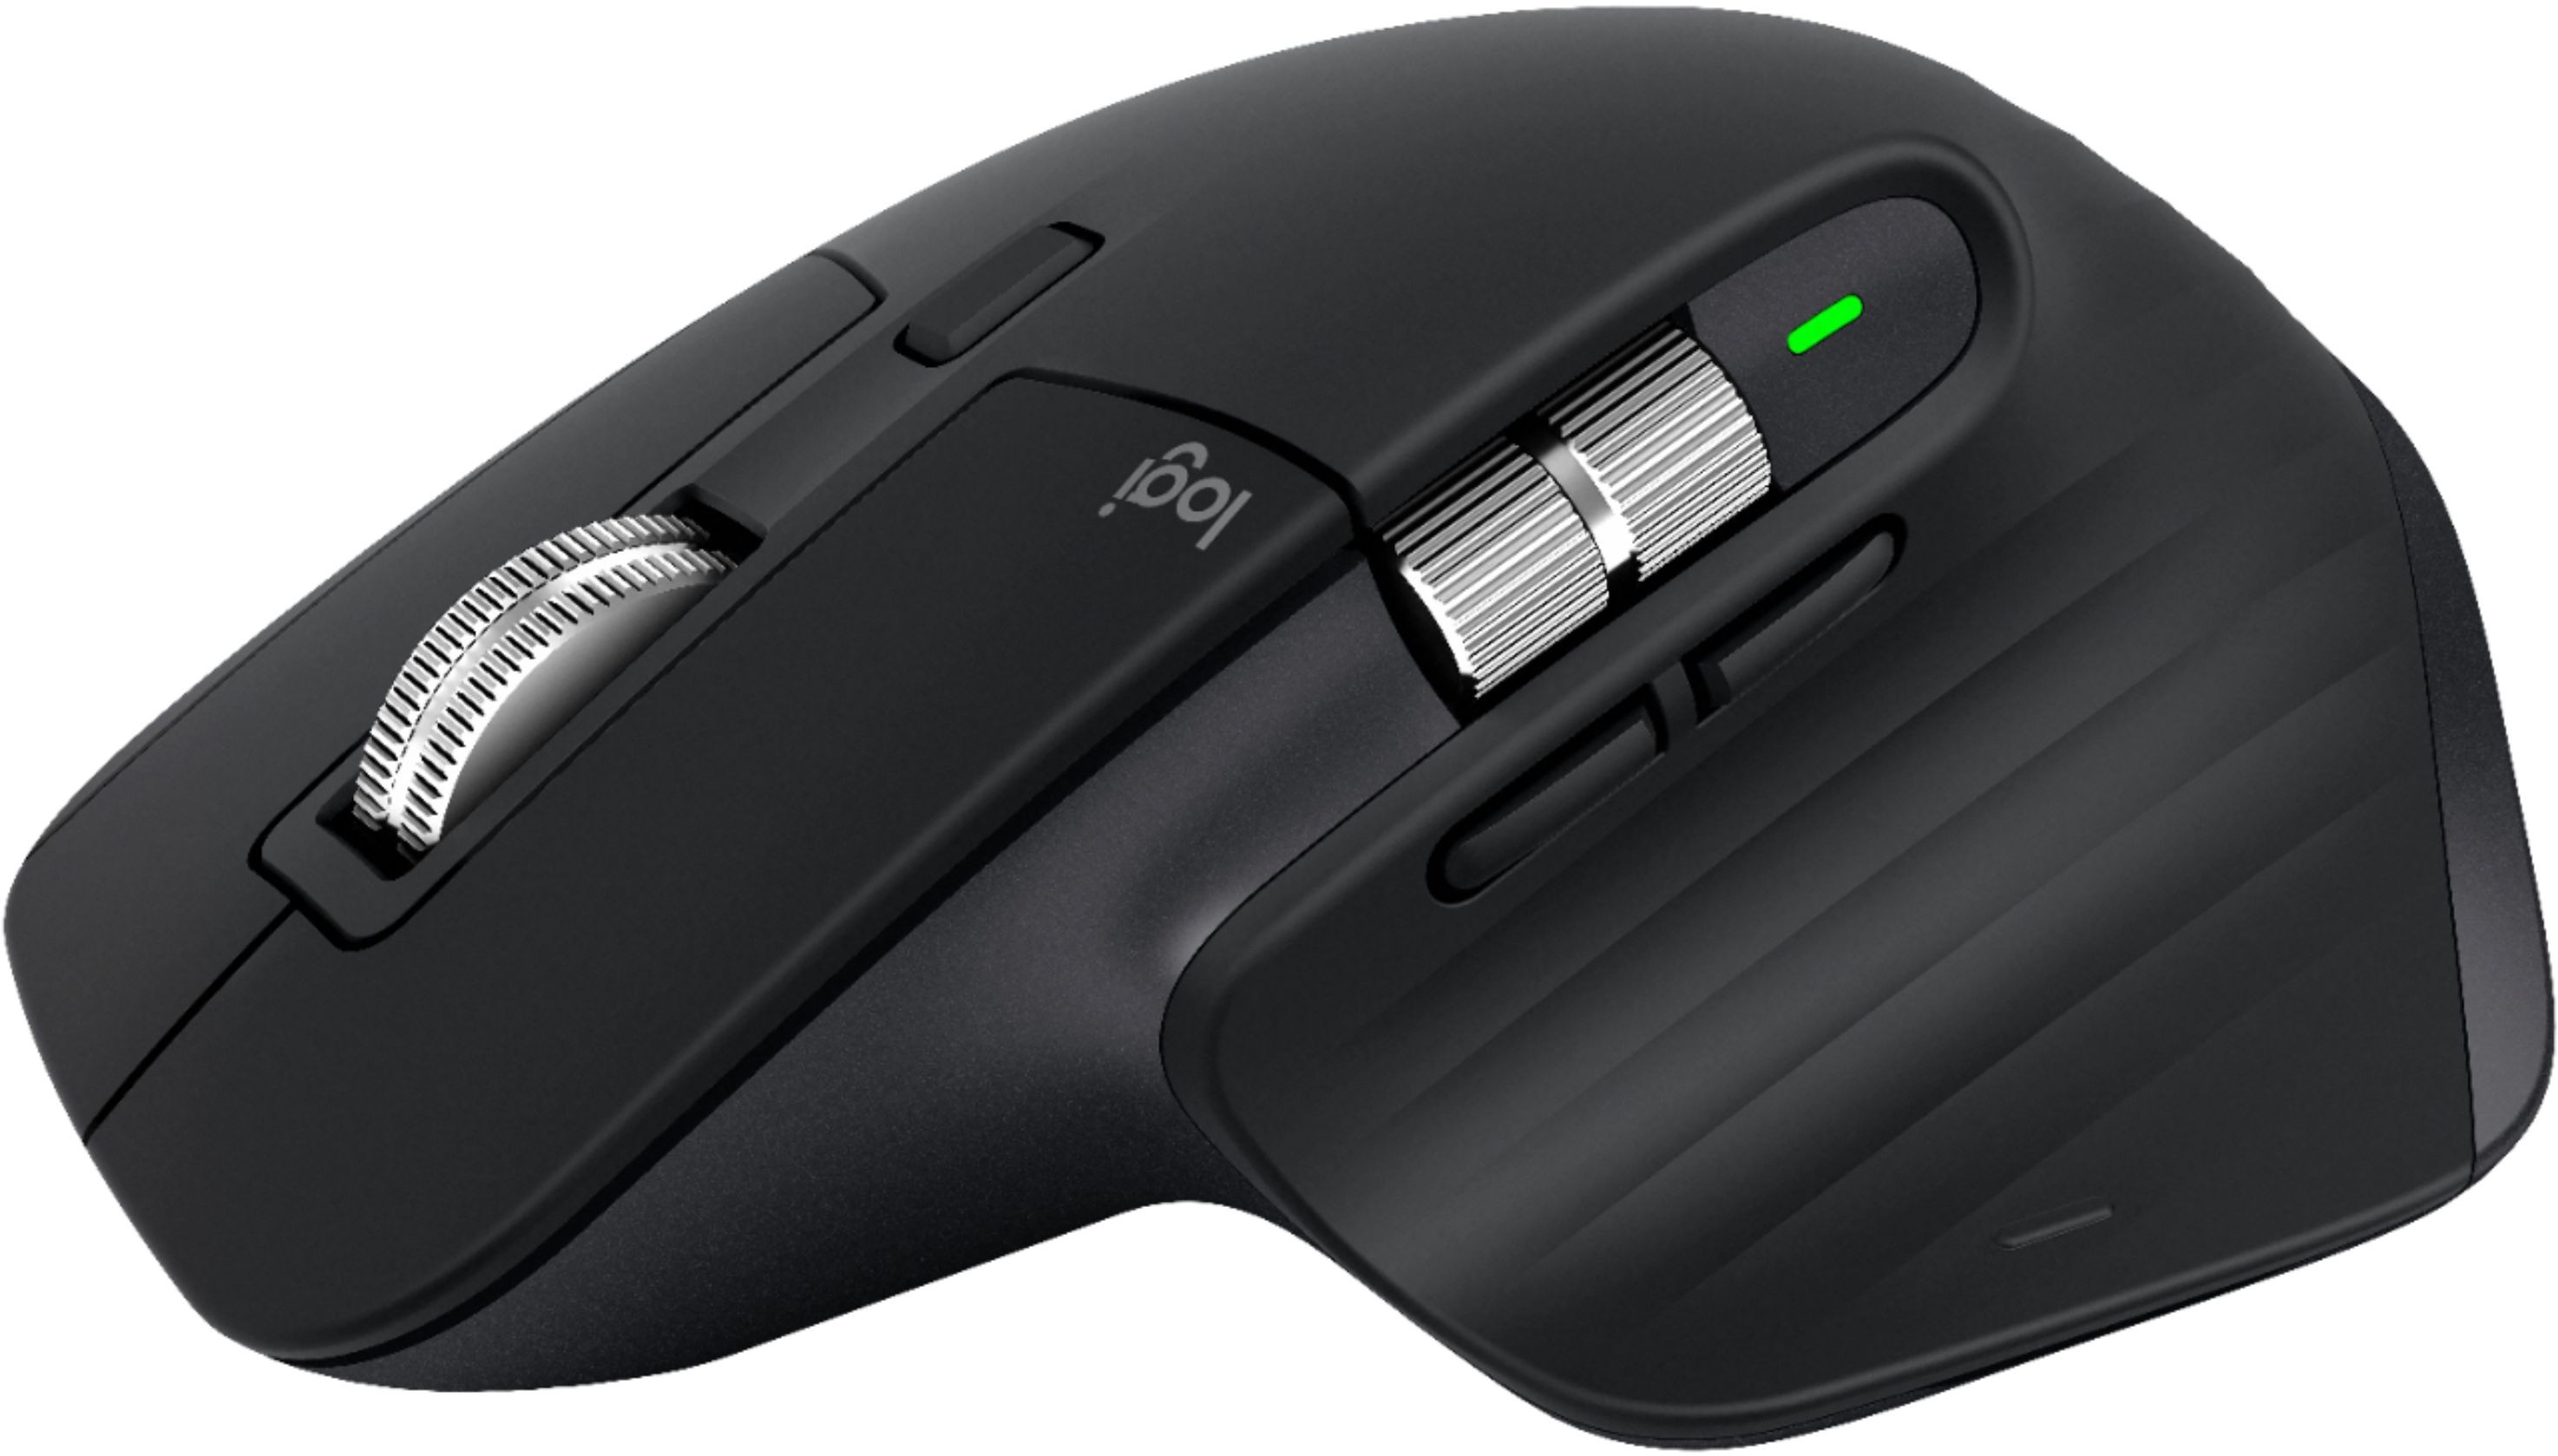 Logitech MX Master 3 Advanced Wireless Mouse 910-005647 Brand New